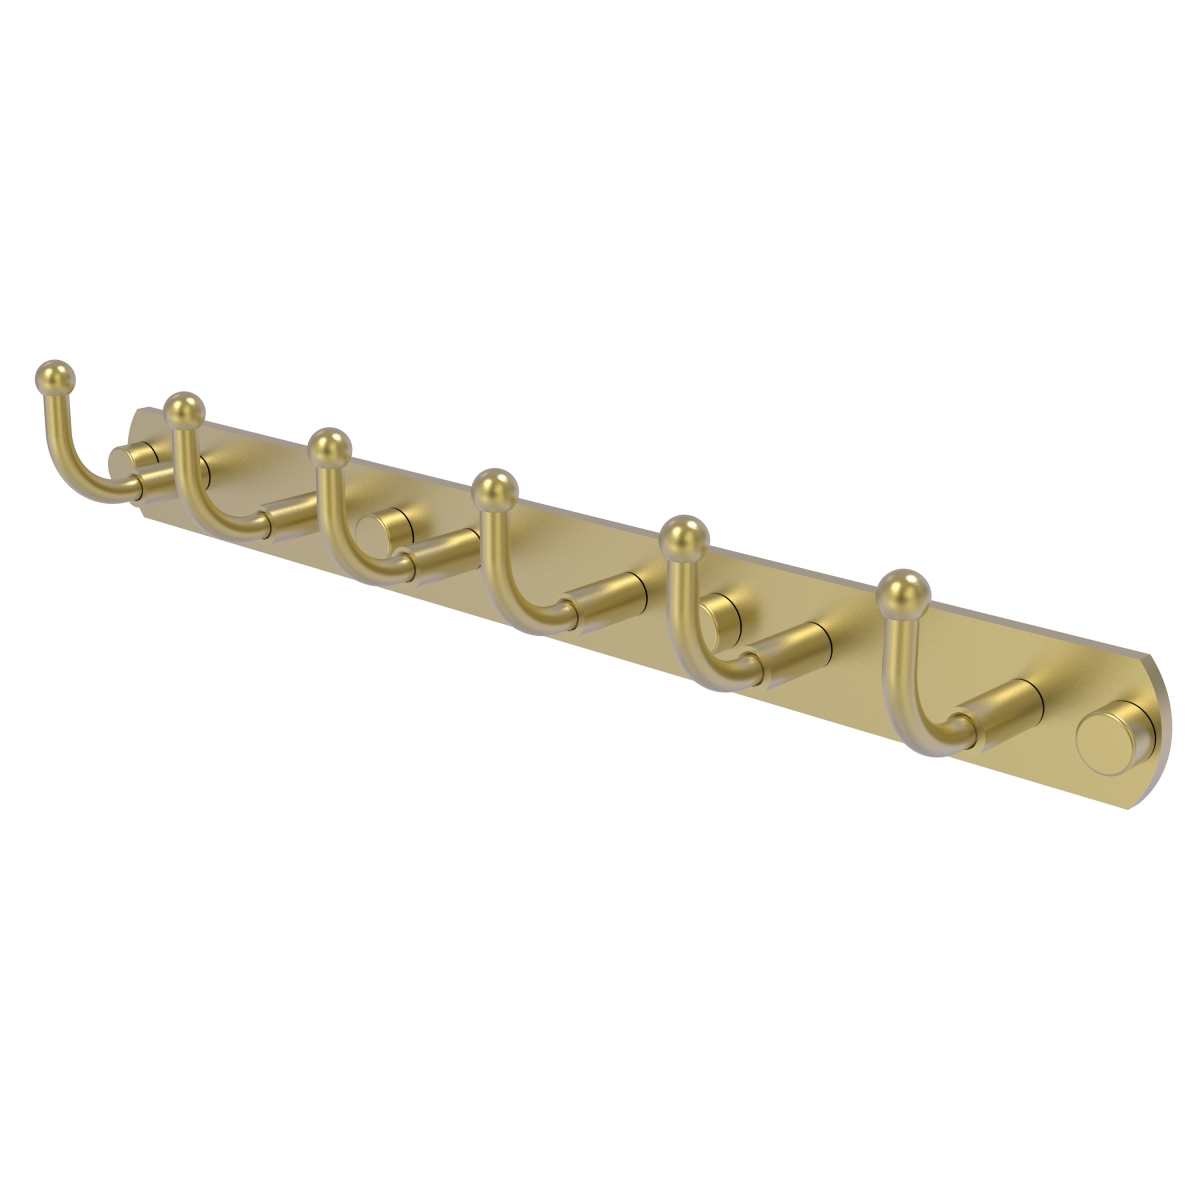 Picture of Allied Brass 1020-6-SBR Skyline Collection 6 Position Tie & Belt Rack, Satin Brass